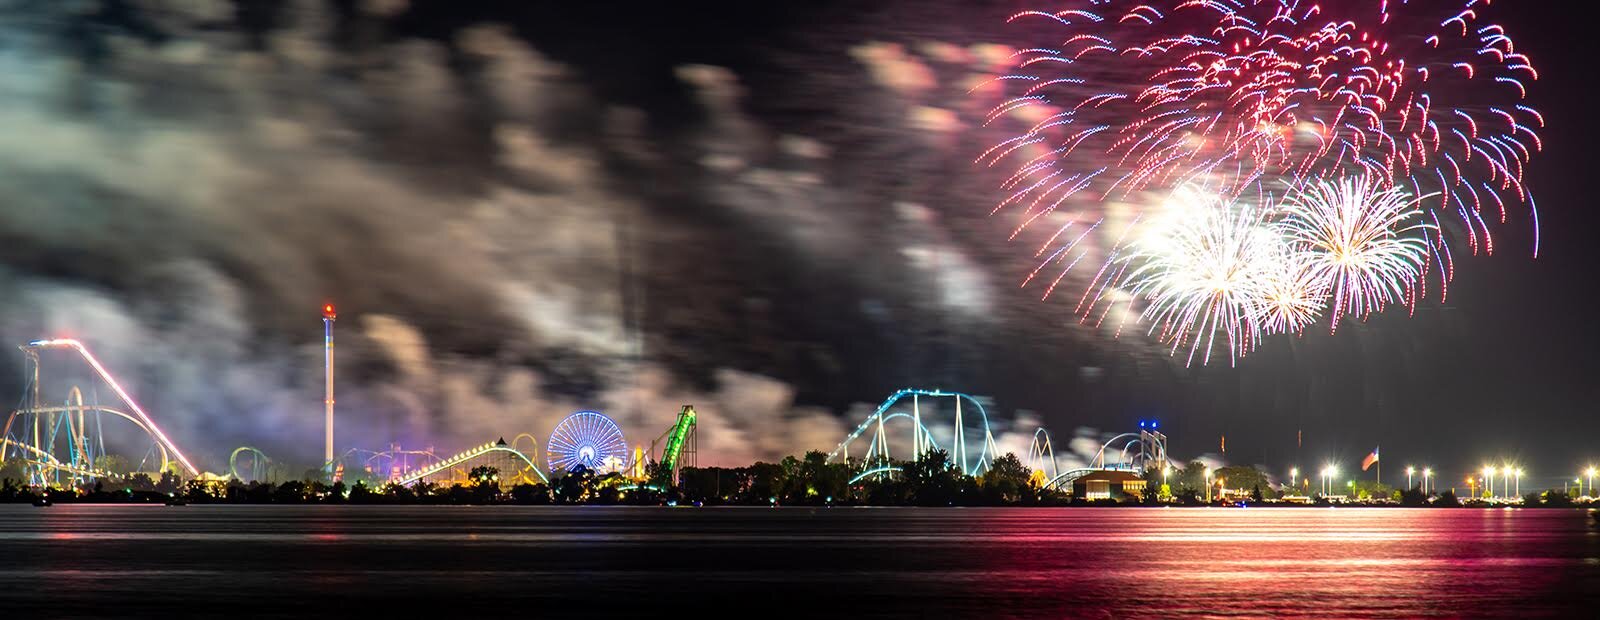 Fireworks fill the sky over Cedar Point on July 4.